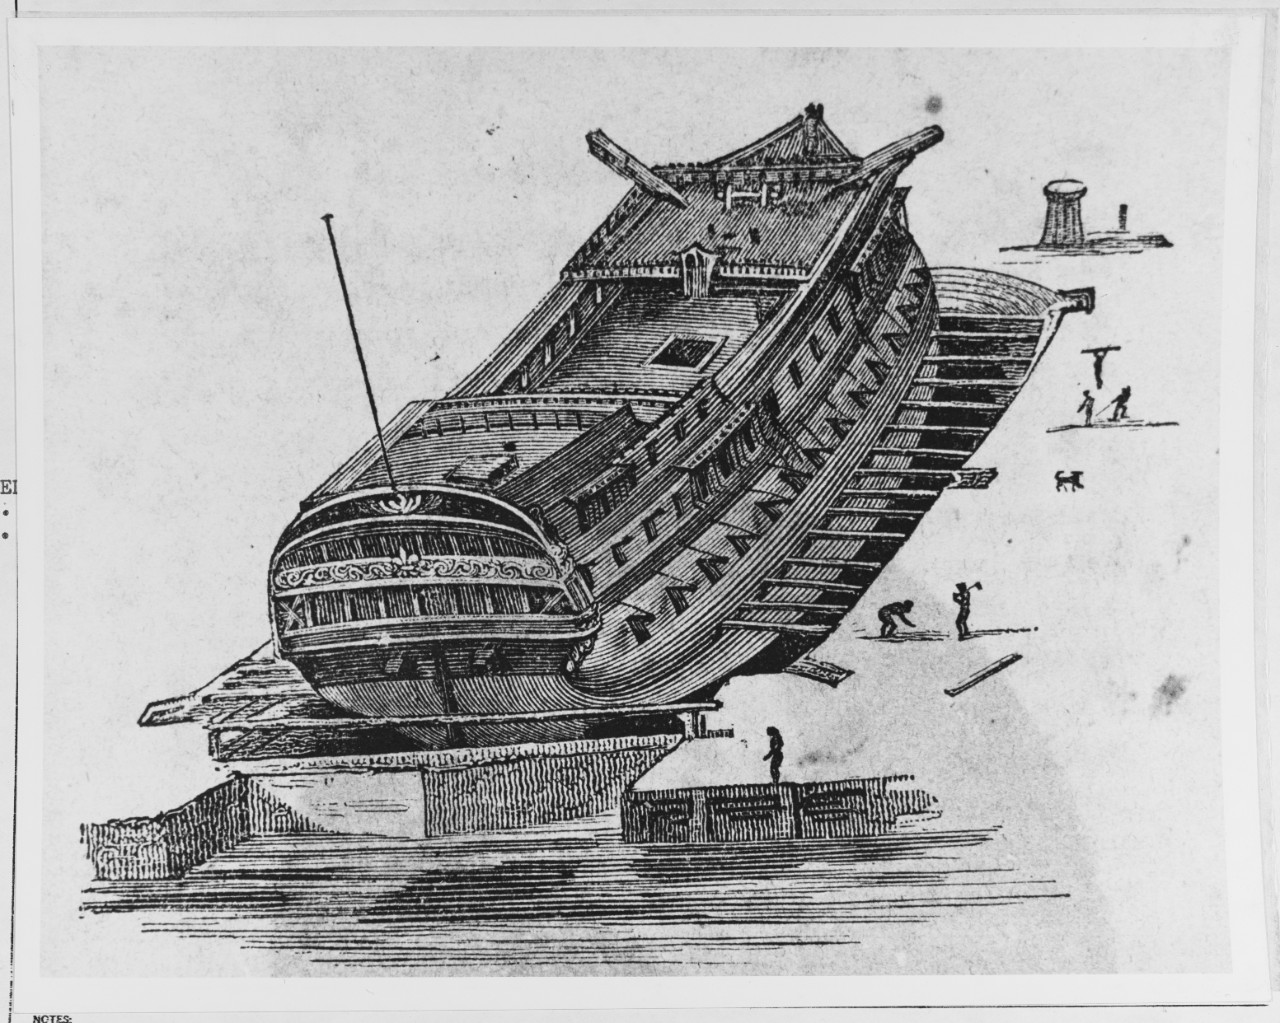 HMS Impetuexu (3rd rate battleship, 1794 -1813)